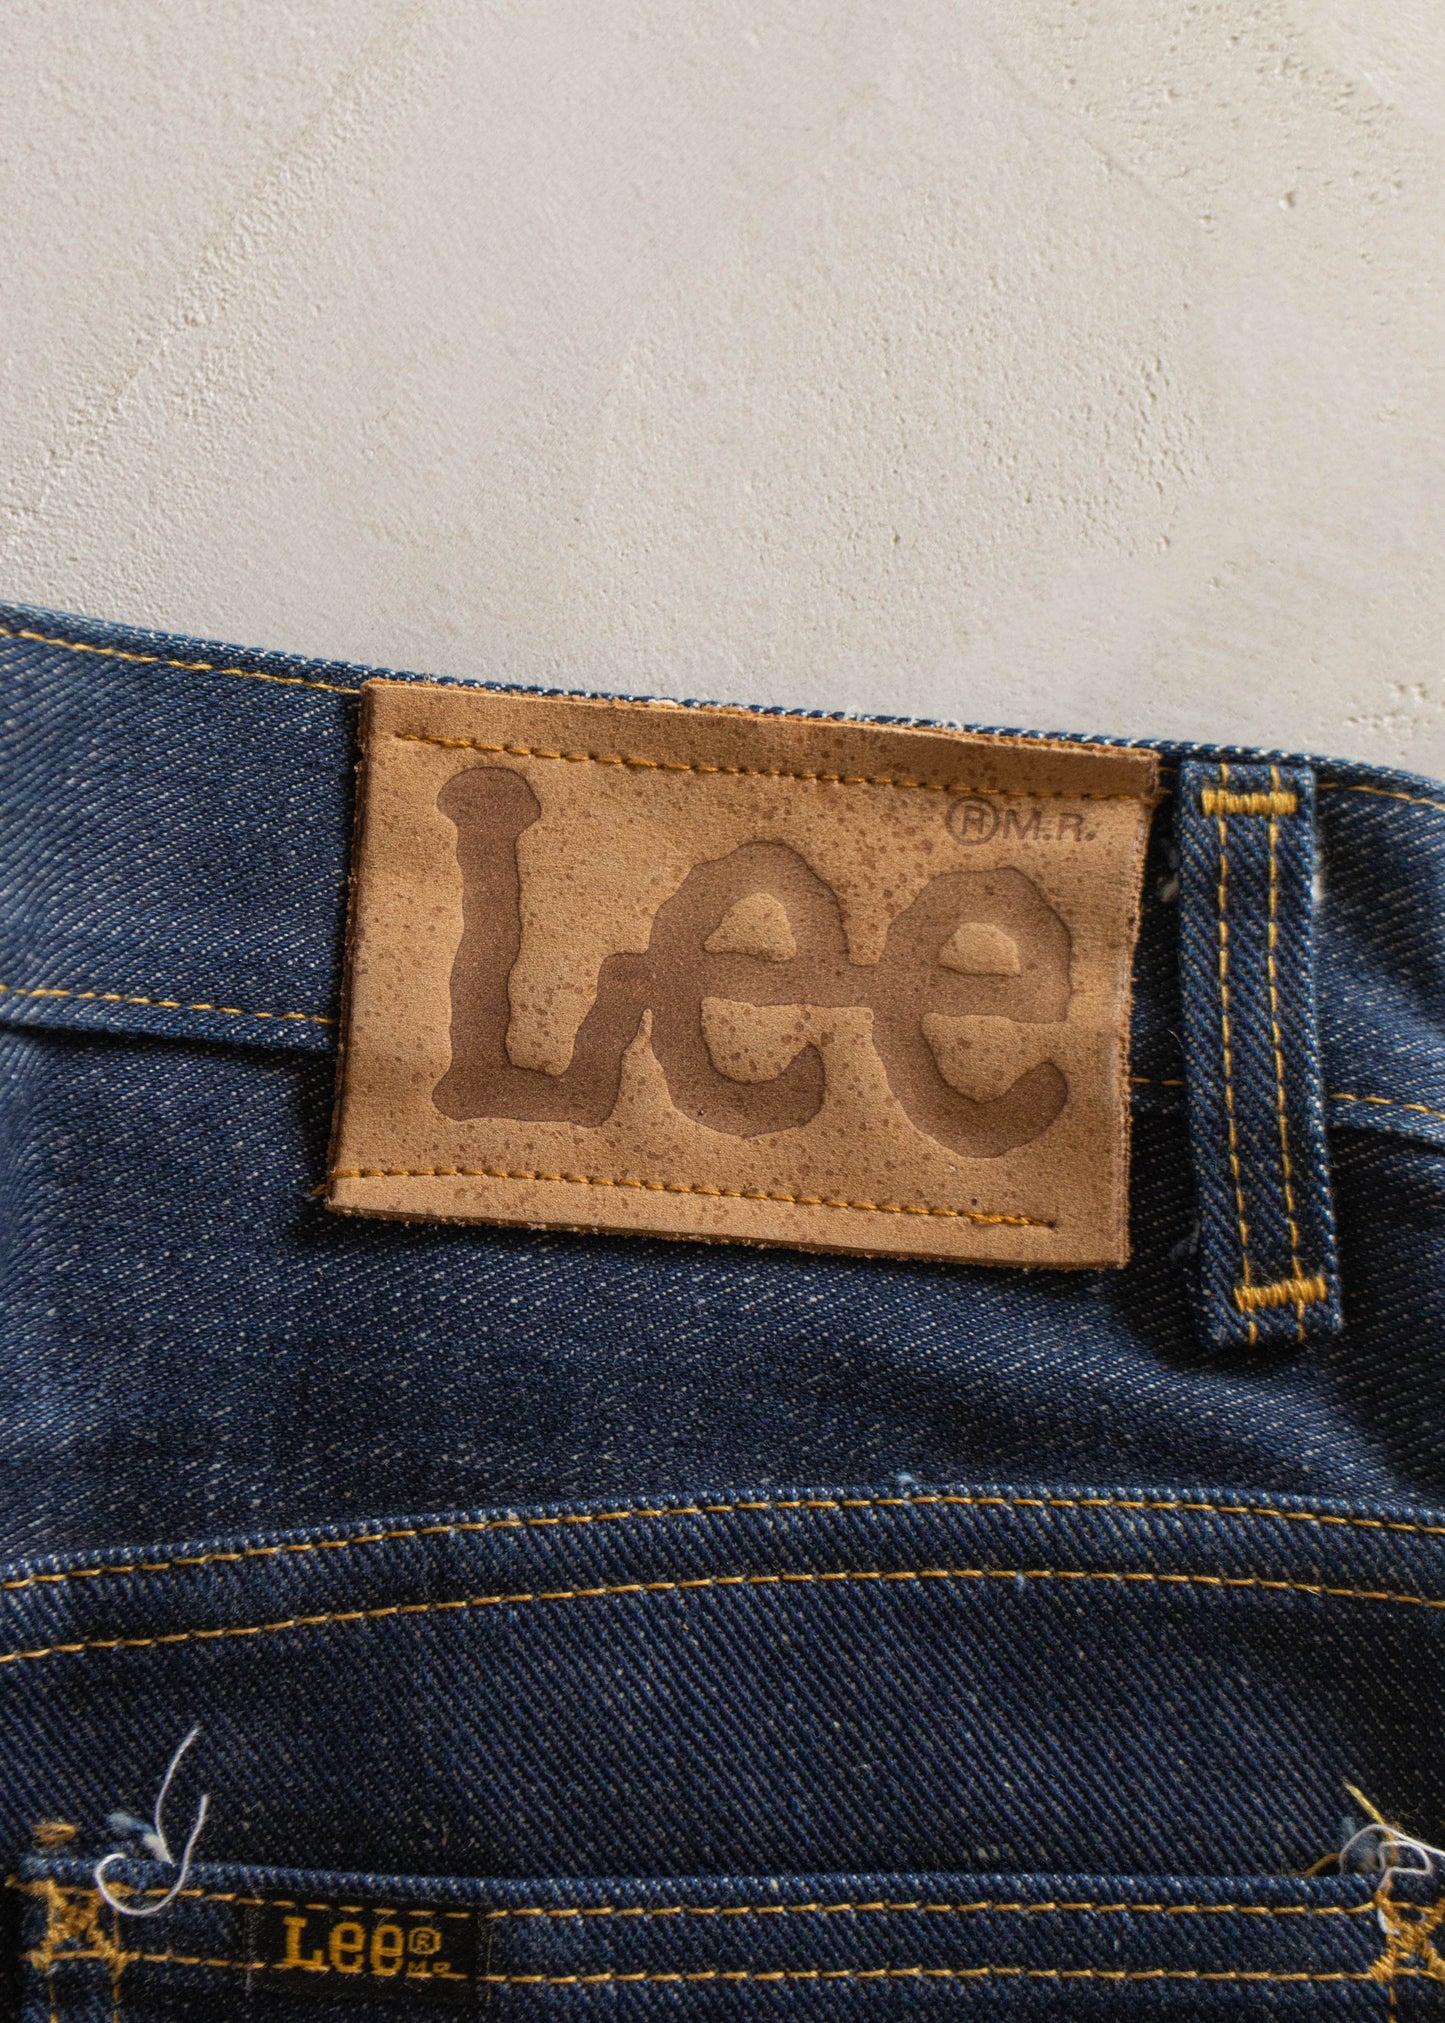 1970s Deadstock Lee Rider Darkwash Flared Jeans Size Women's 26 Men's 30